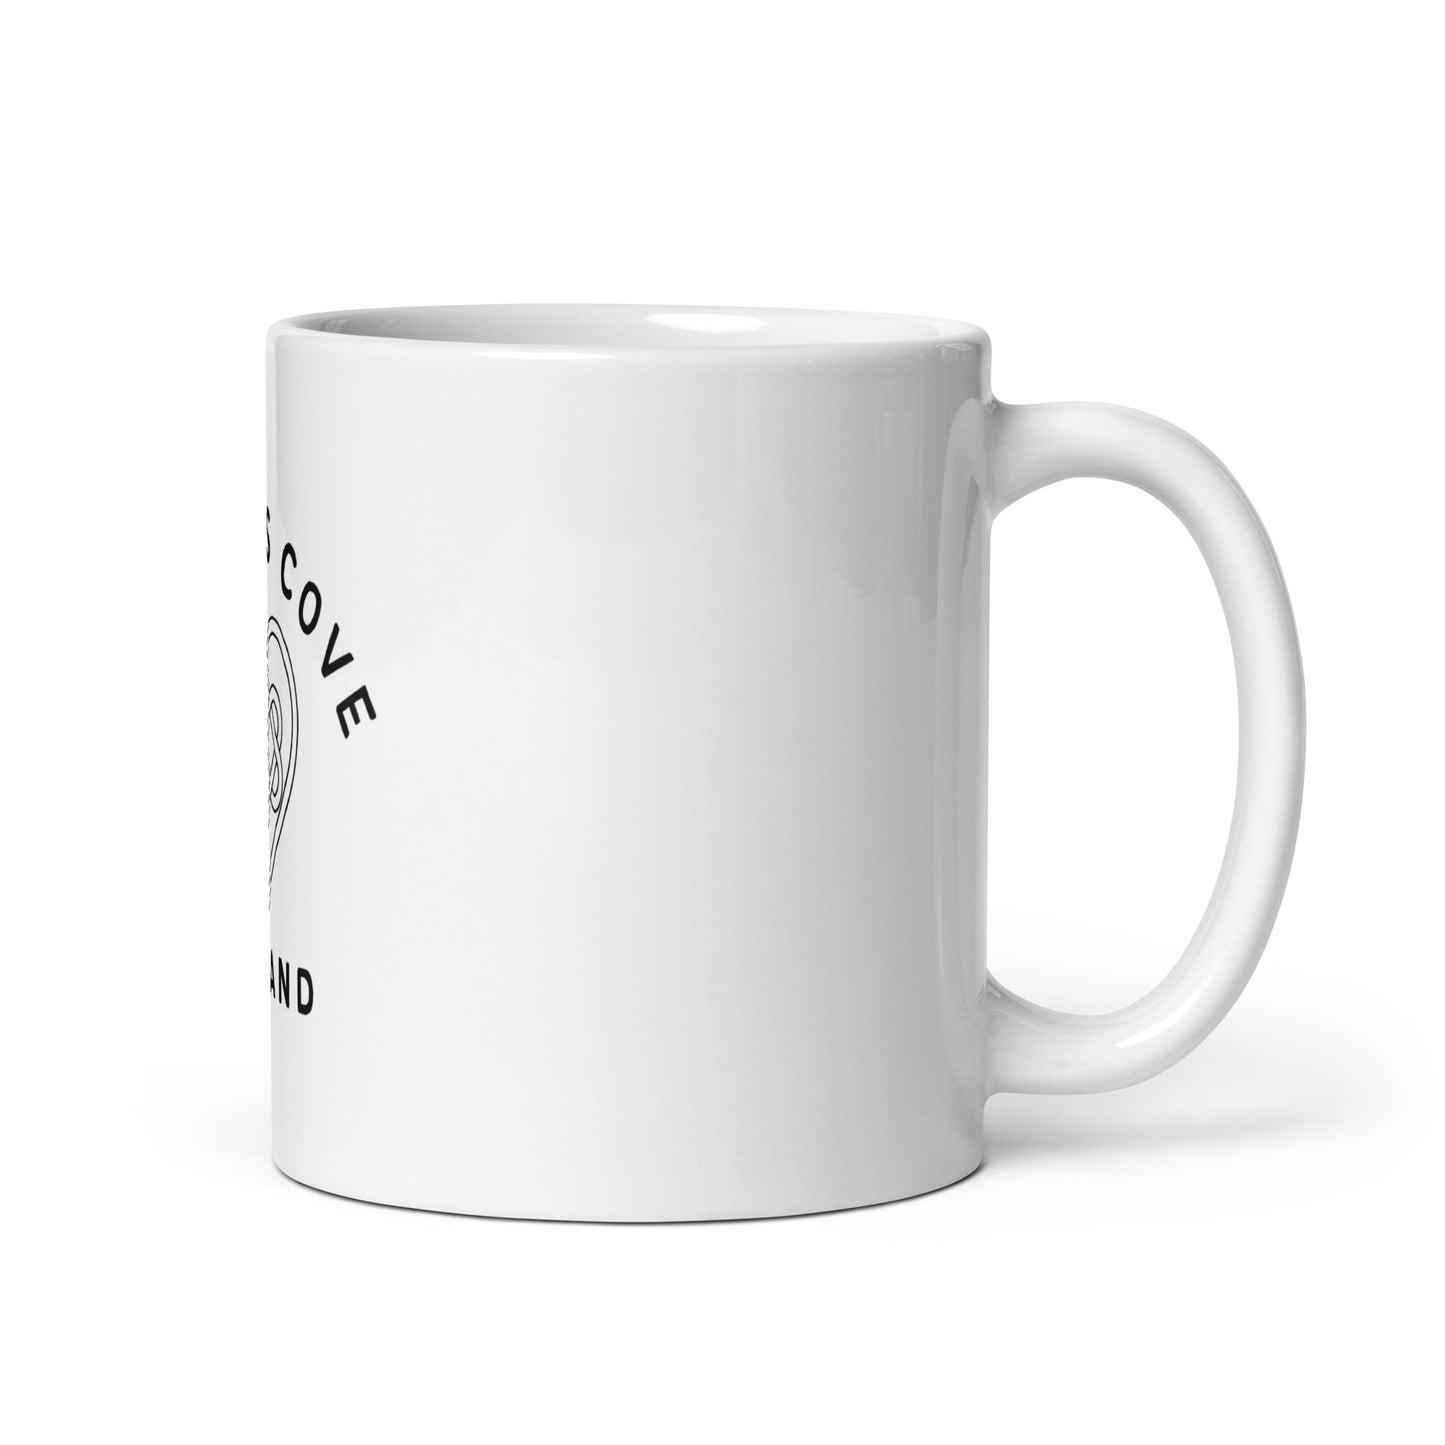 Grace's Cove White glossy mug